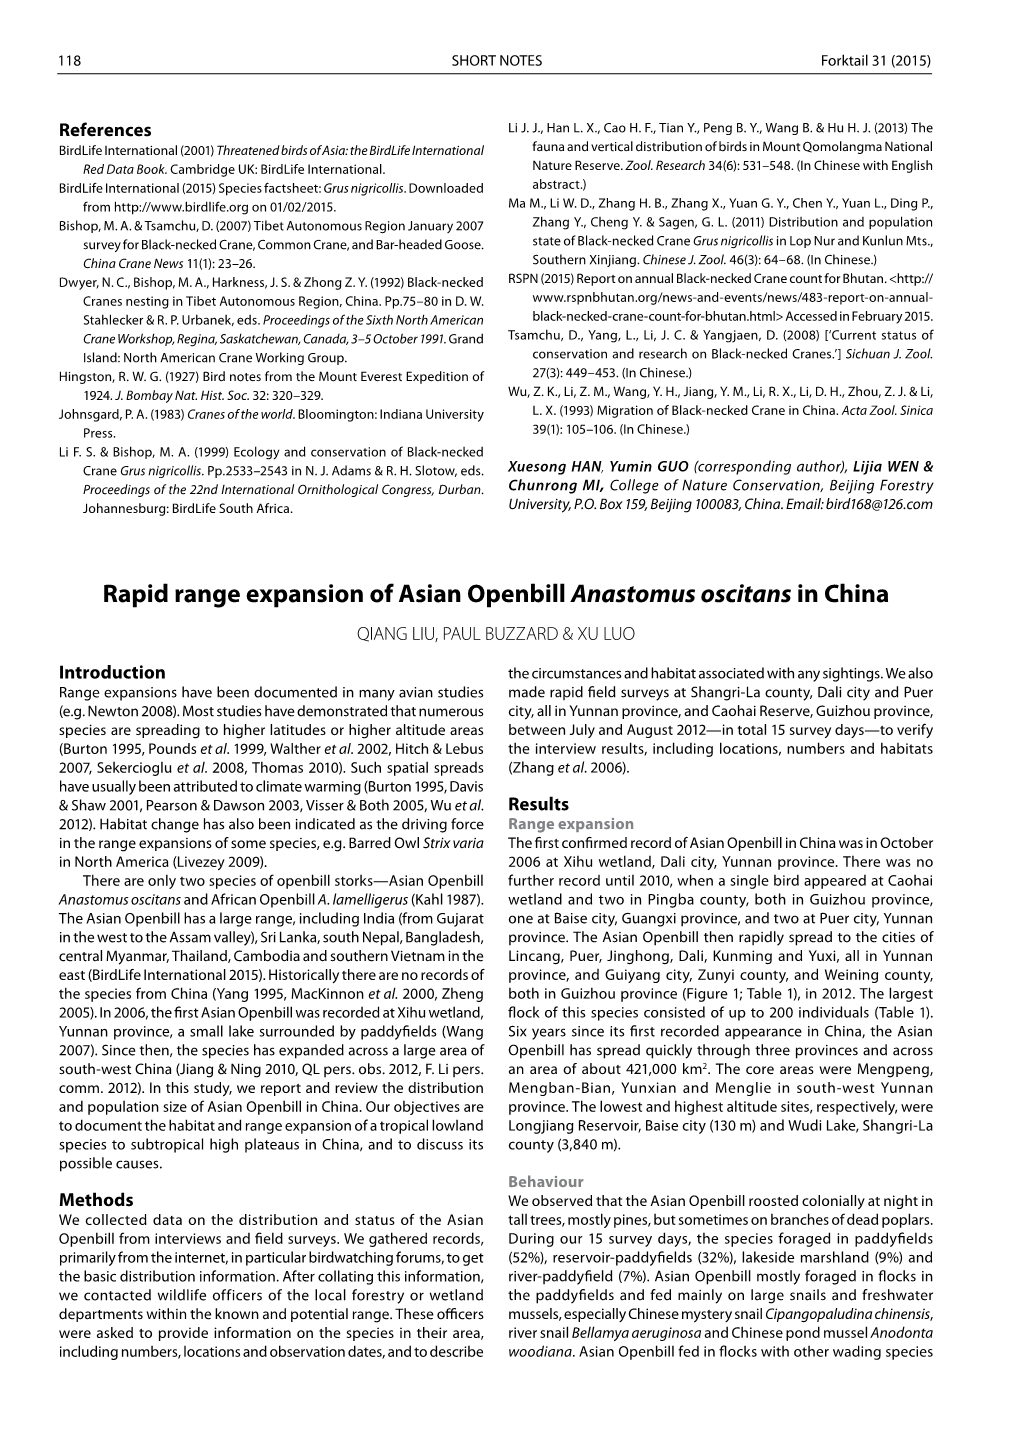 Rapid Range Expansion of Asian Openbill Anastomus Oscitans in China QIANG LIU, PAUL BUZZARD & XU LUO